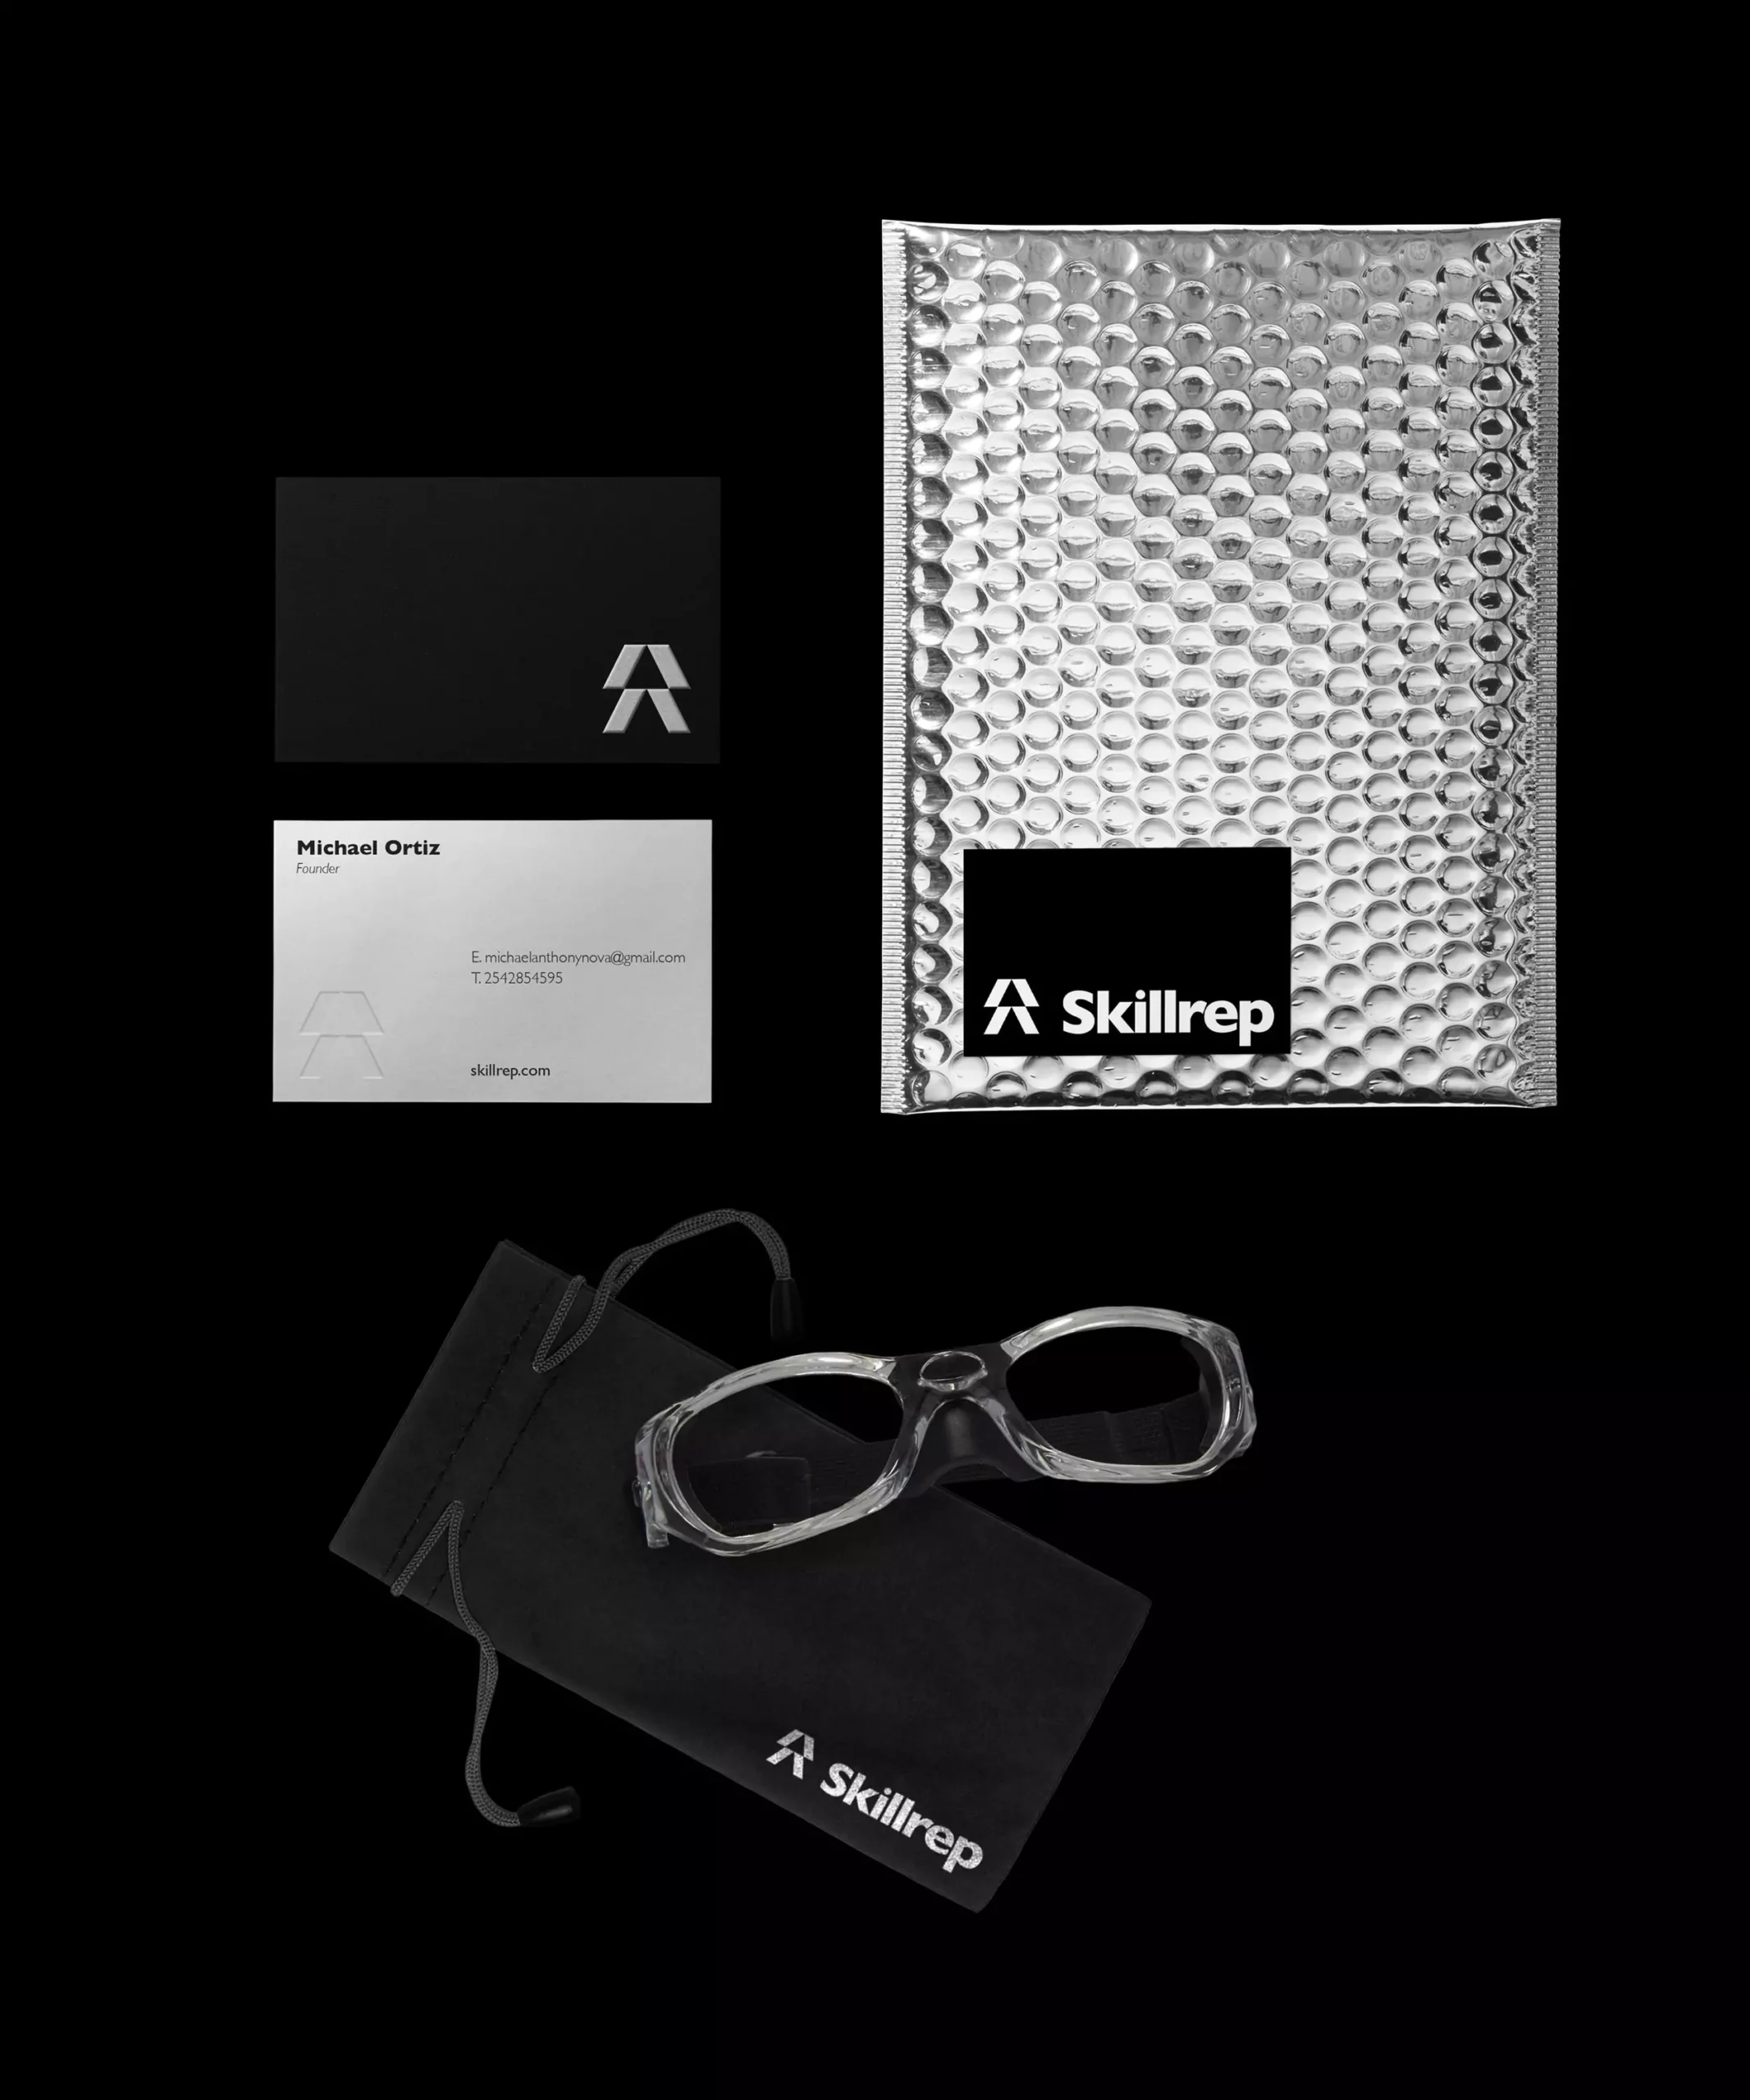 Skillrep Visual Identity - Corporate Stationery Design